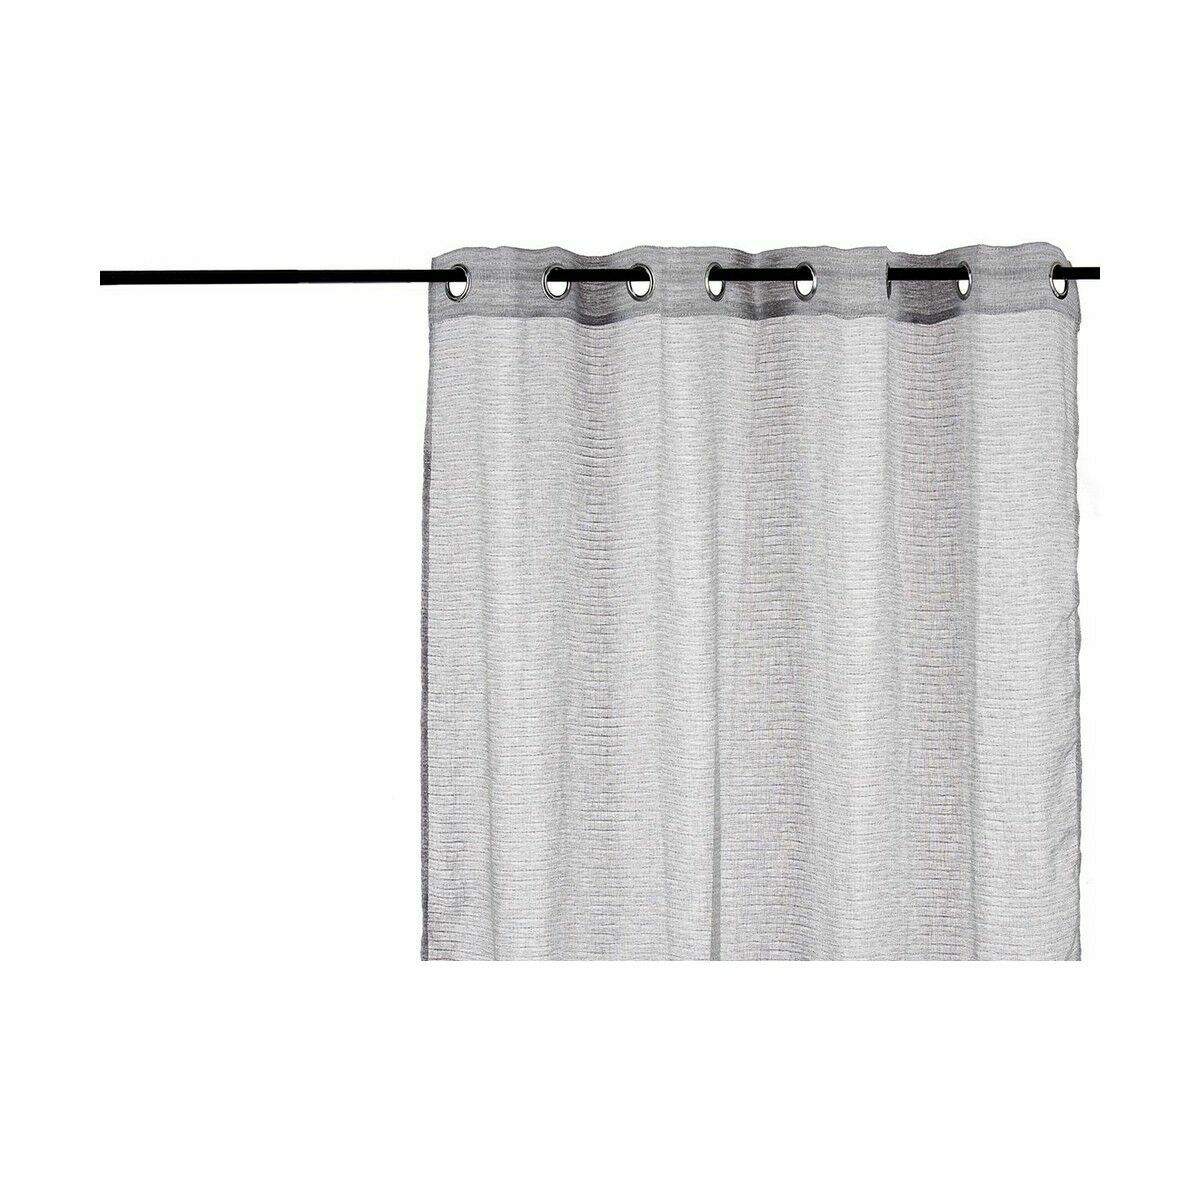 Curtain Light grey 140 x 0,1 x 260 cm (6 Units)